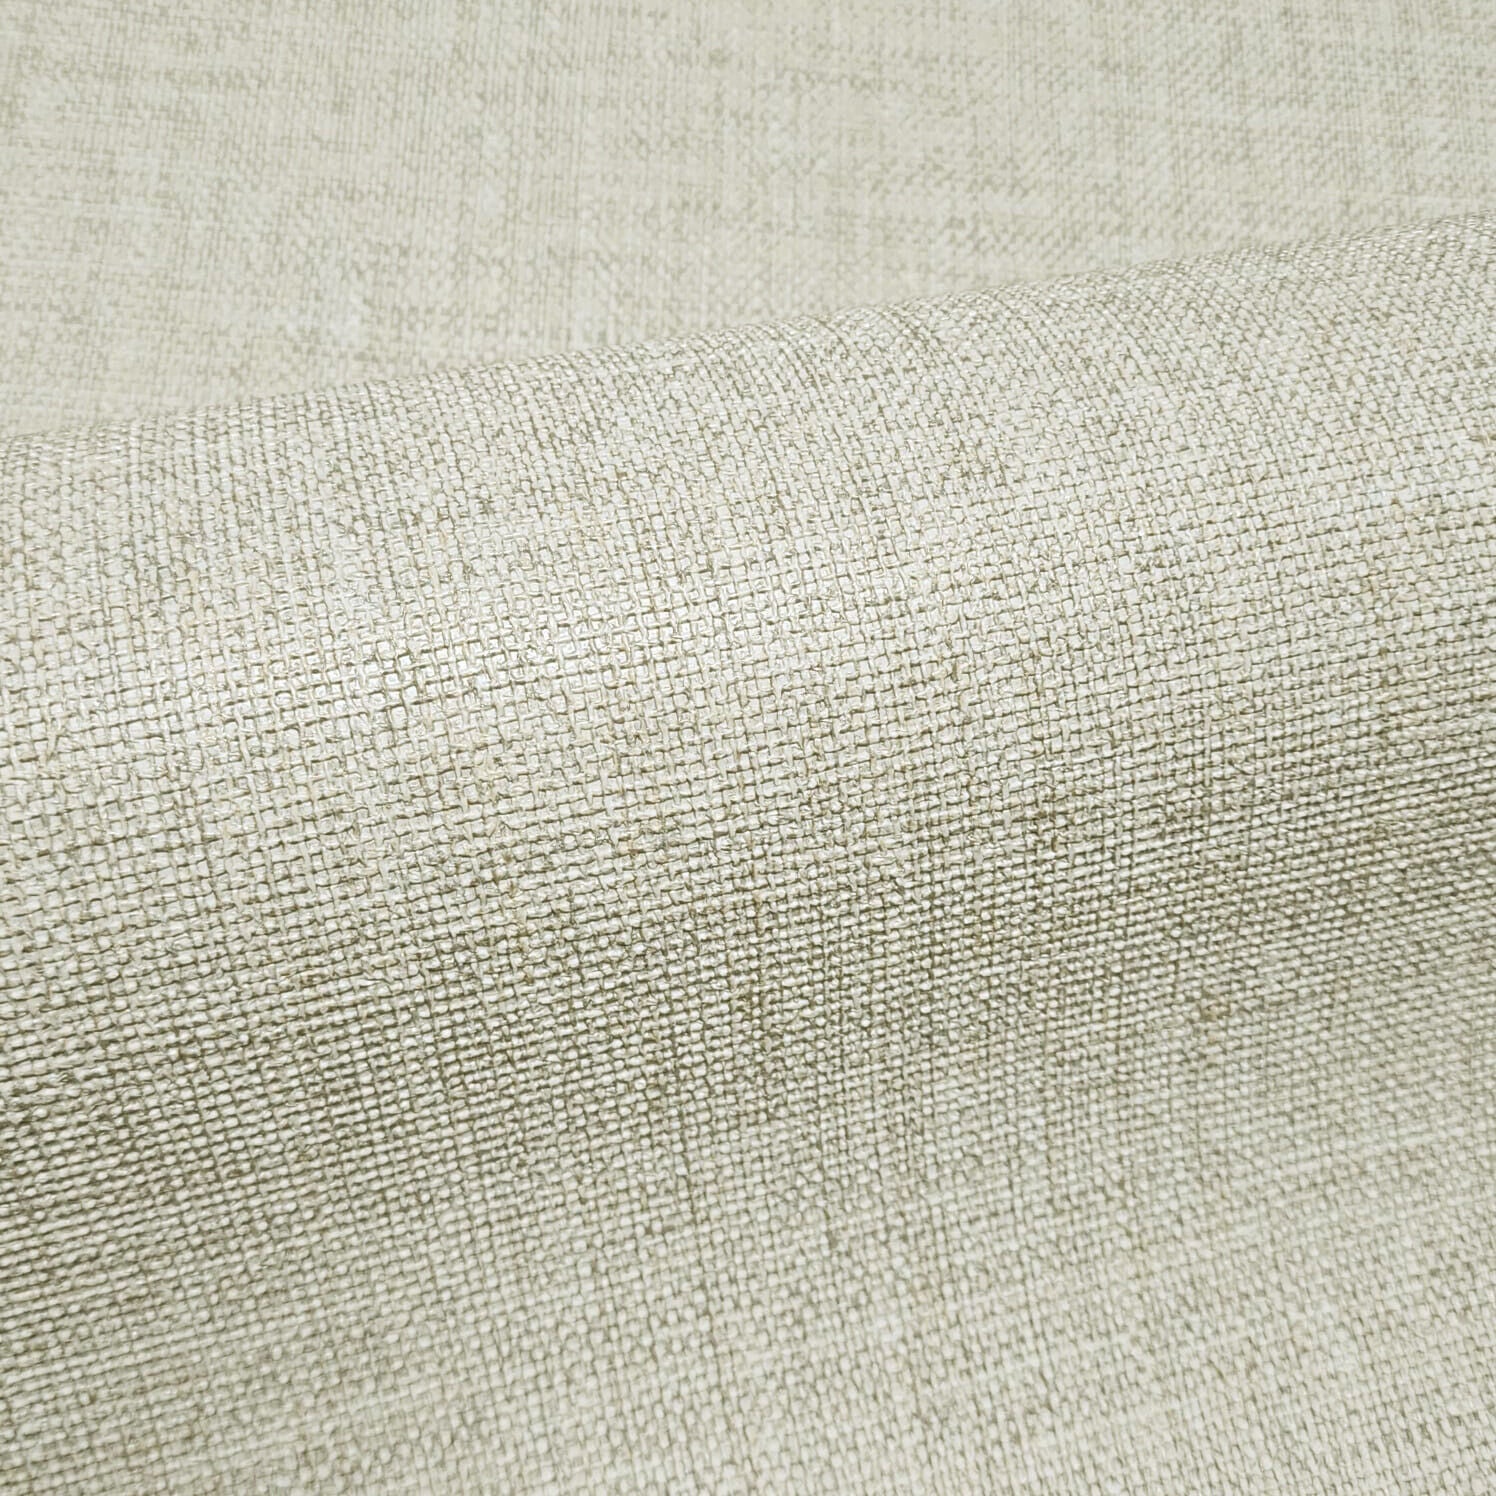 Z77508 Modern rustic grayish tan plain faux woven fabric textured 